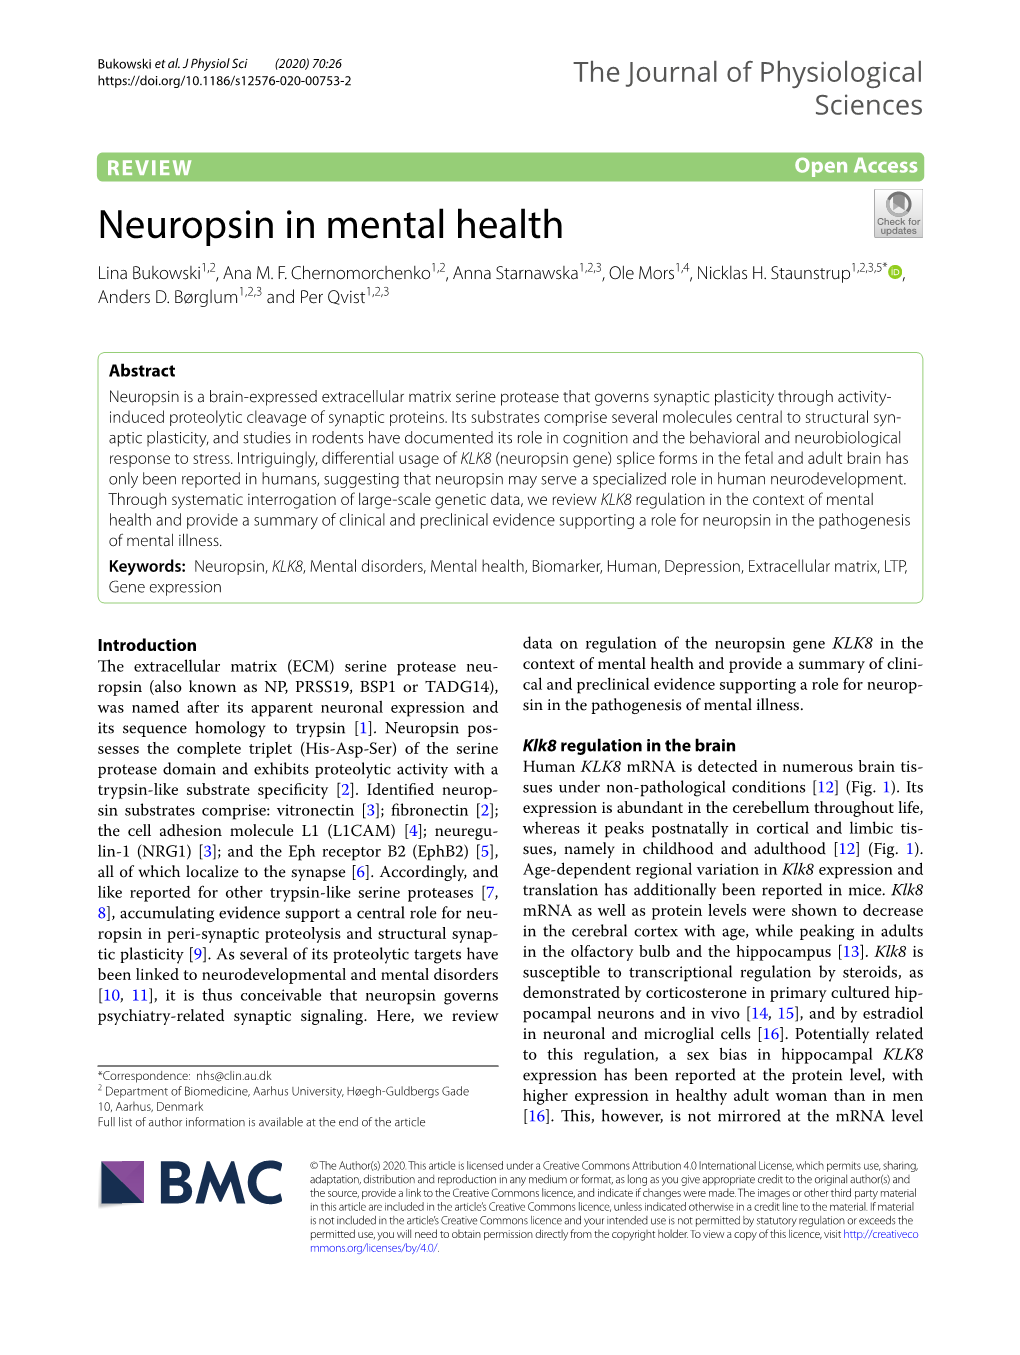 Neuropsin in Mental Health Lina Bukowski1,2, Ana M